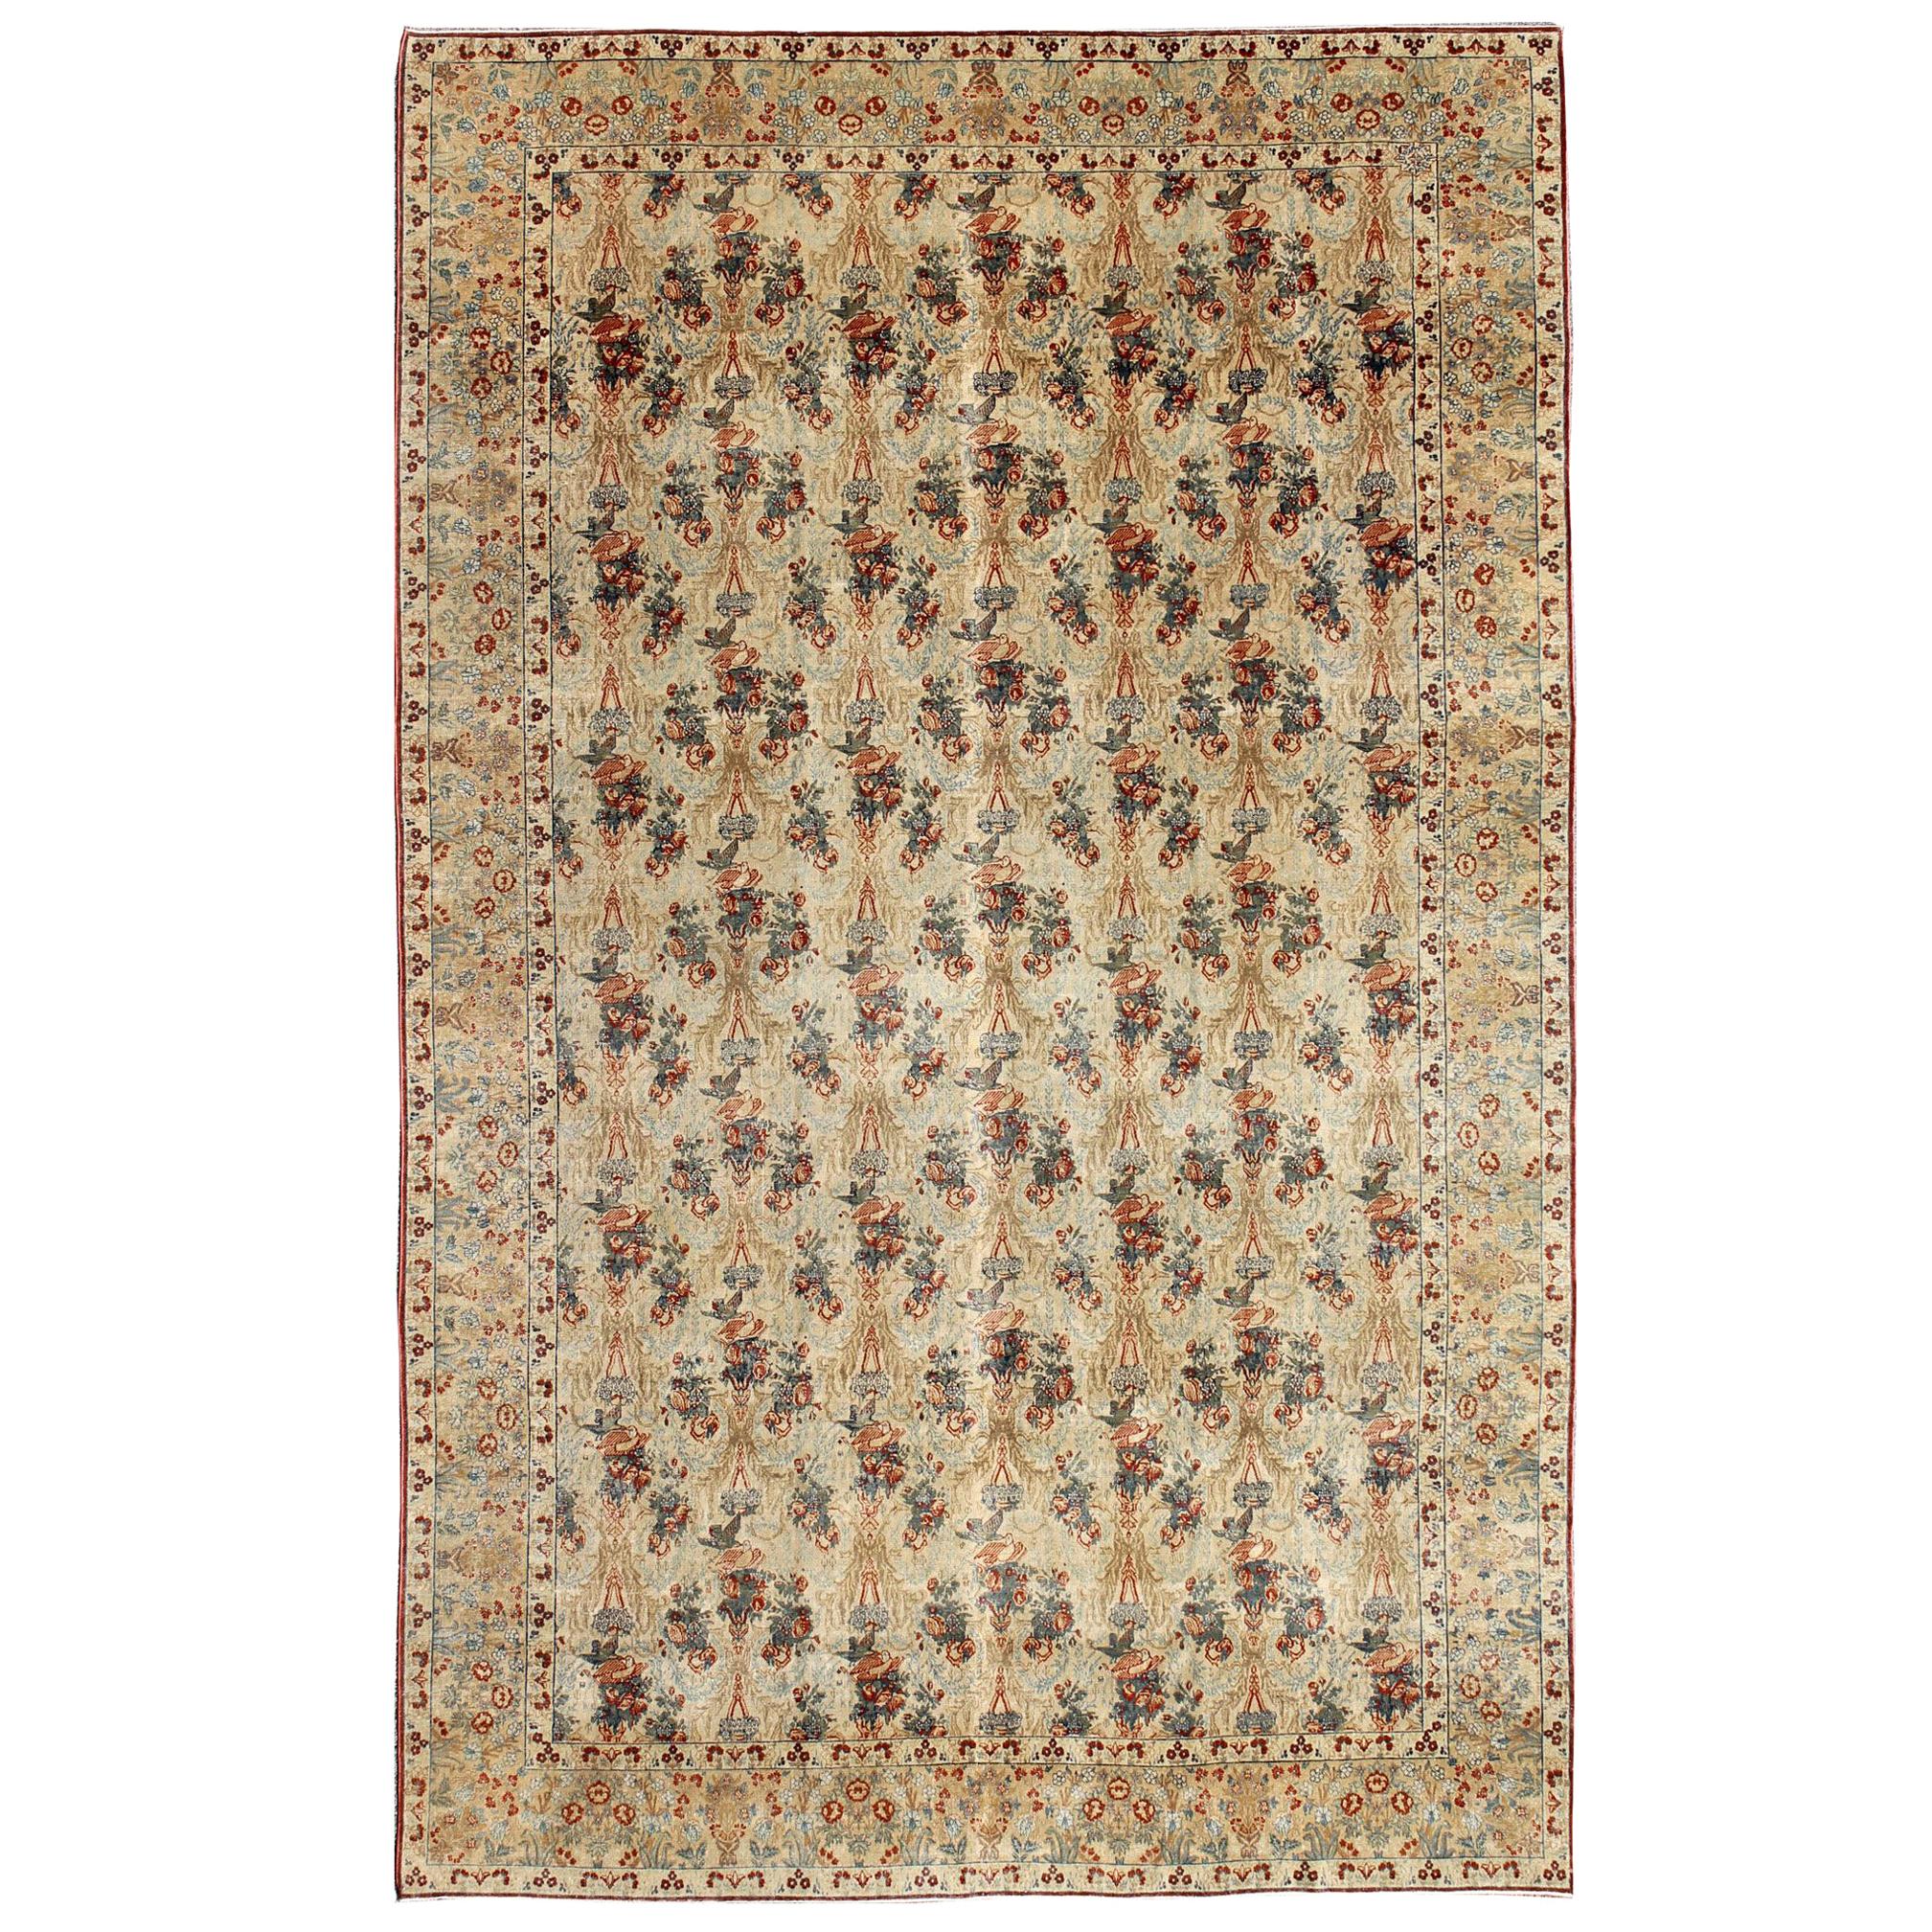 Antique Fine Tabriz Persian Carpet in Ivory Background in Florals & Bird Design For Sale